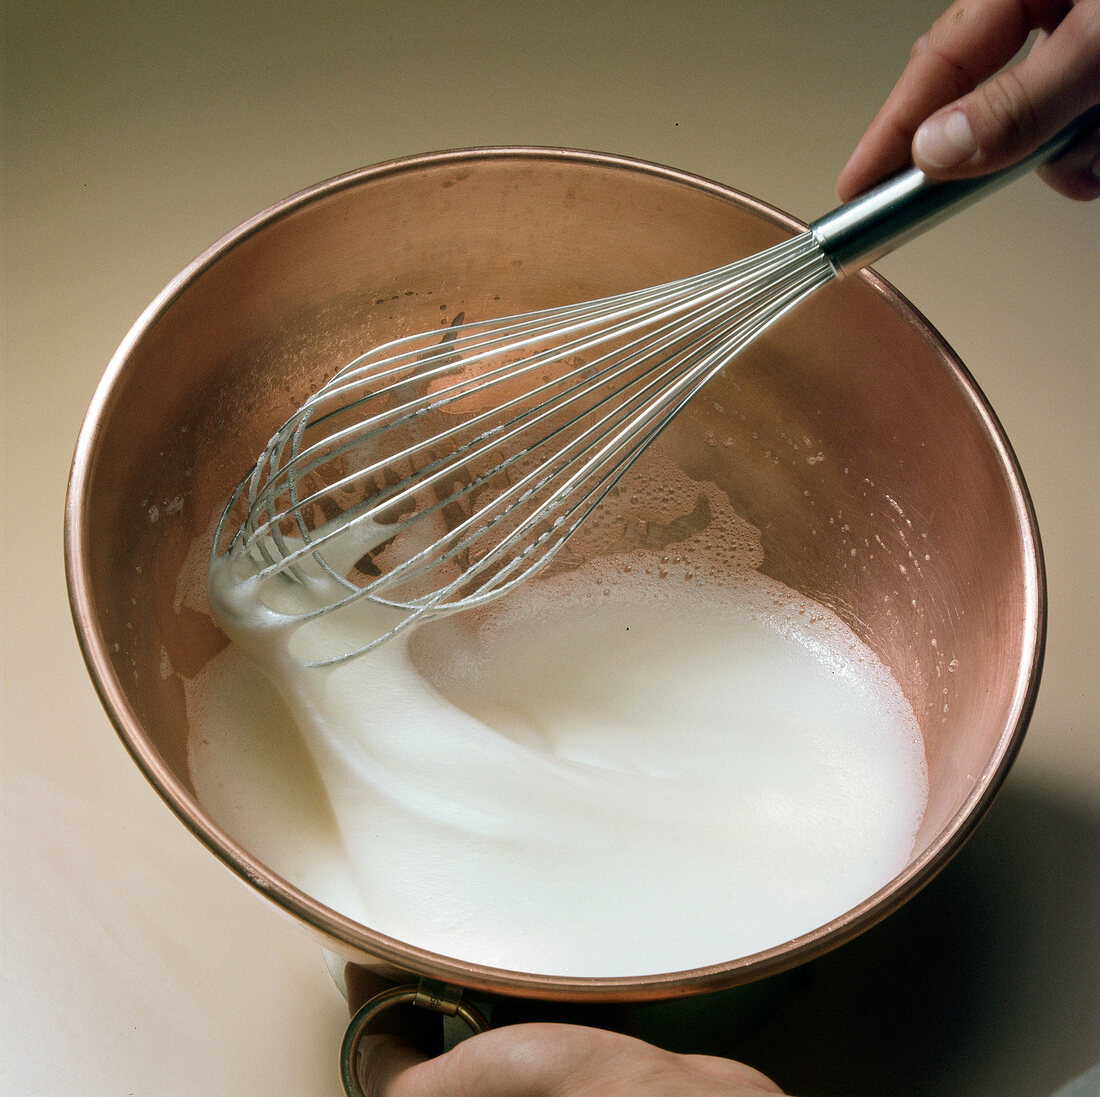 Hand whisking liquid for preparation of meringue, step 2